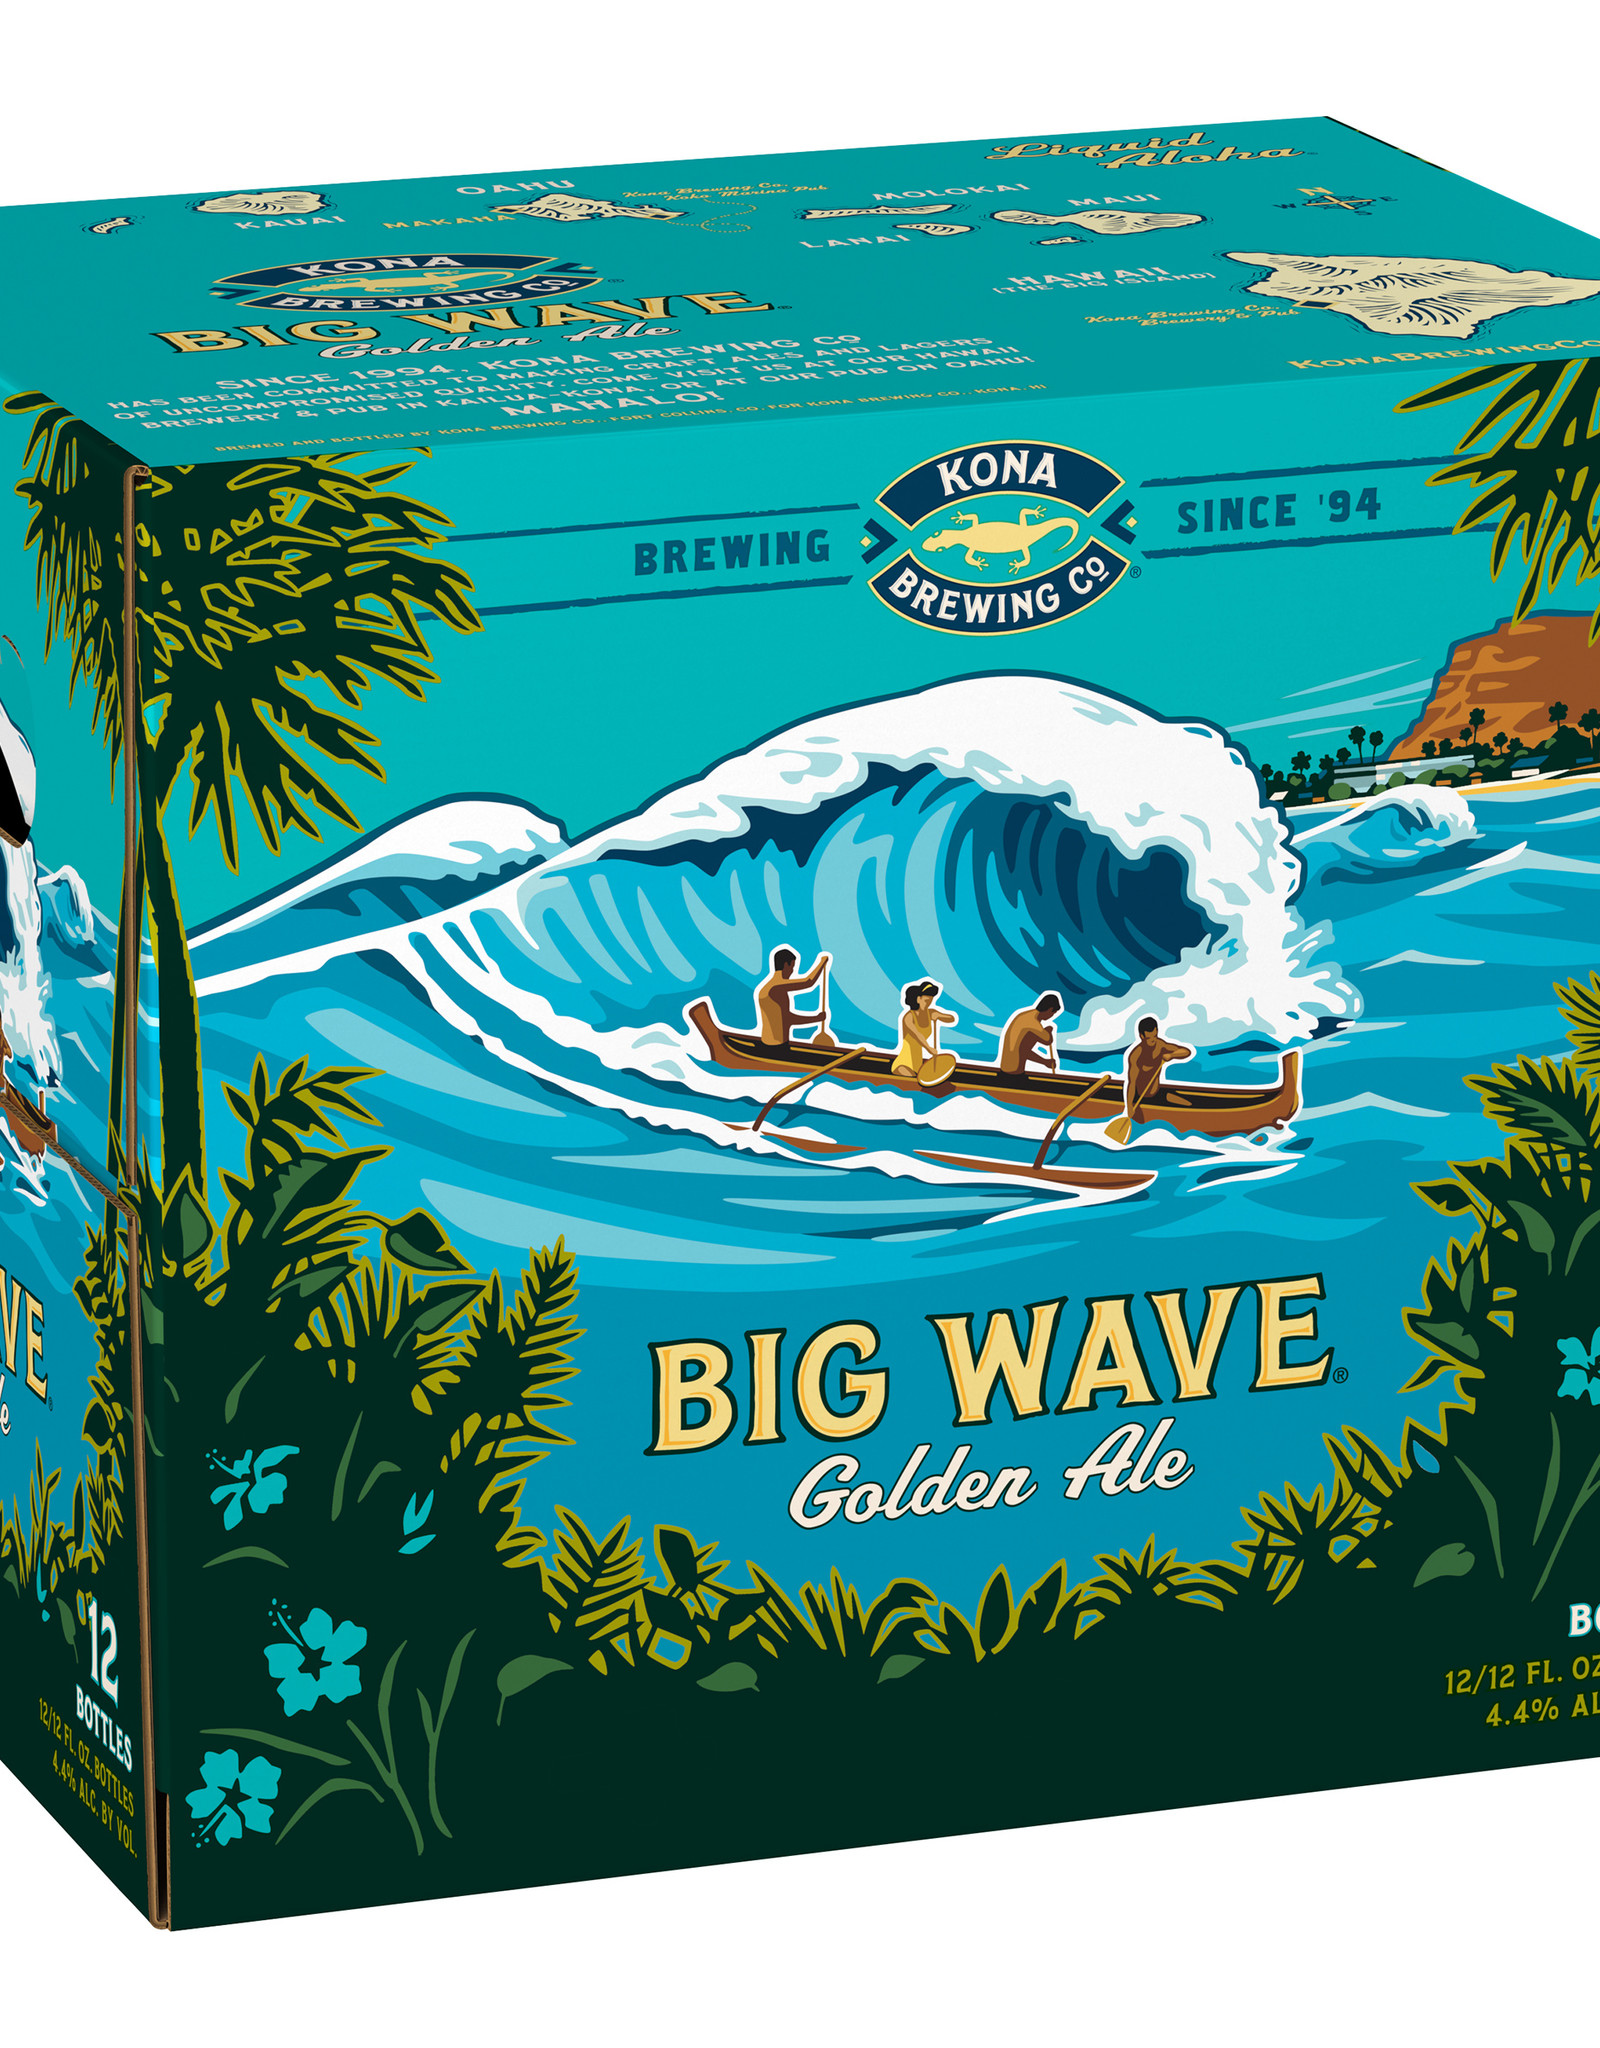 Kona Big Wave 12x12 oz bottles